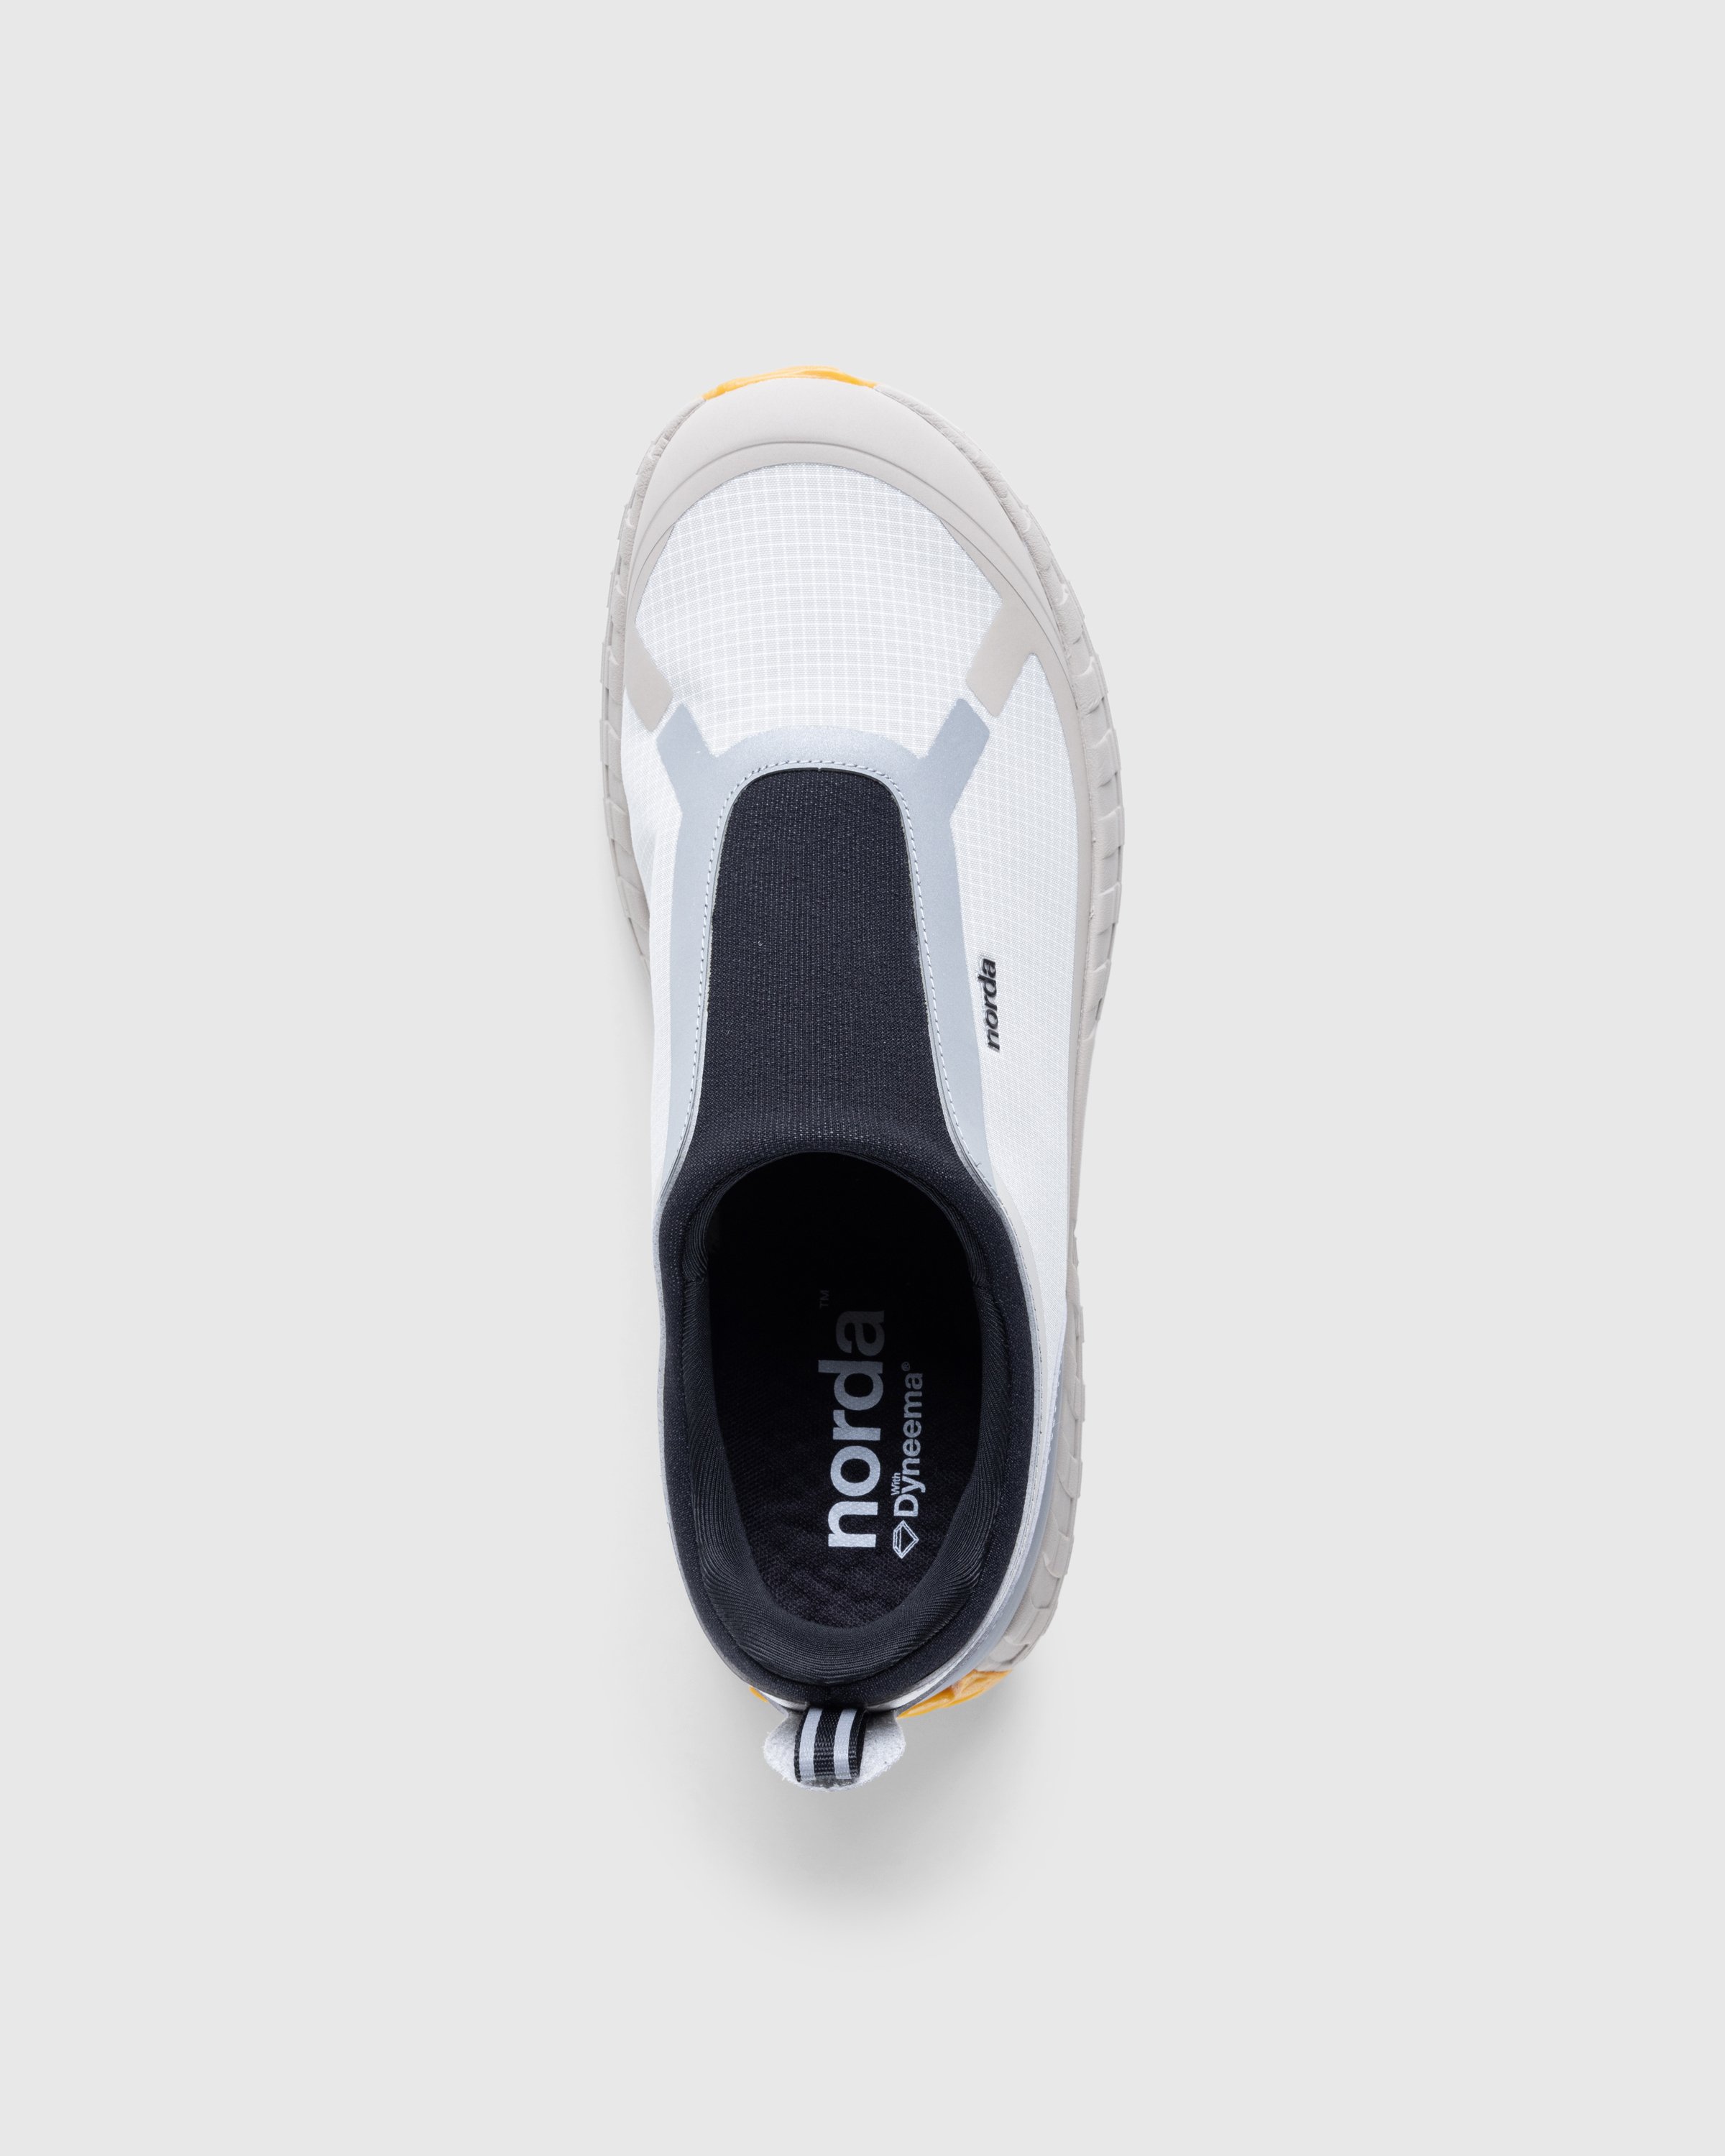 Norda - NORDA003-W - Footwear - Grey - Image 5